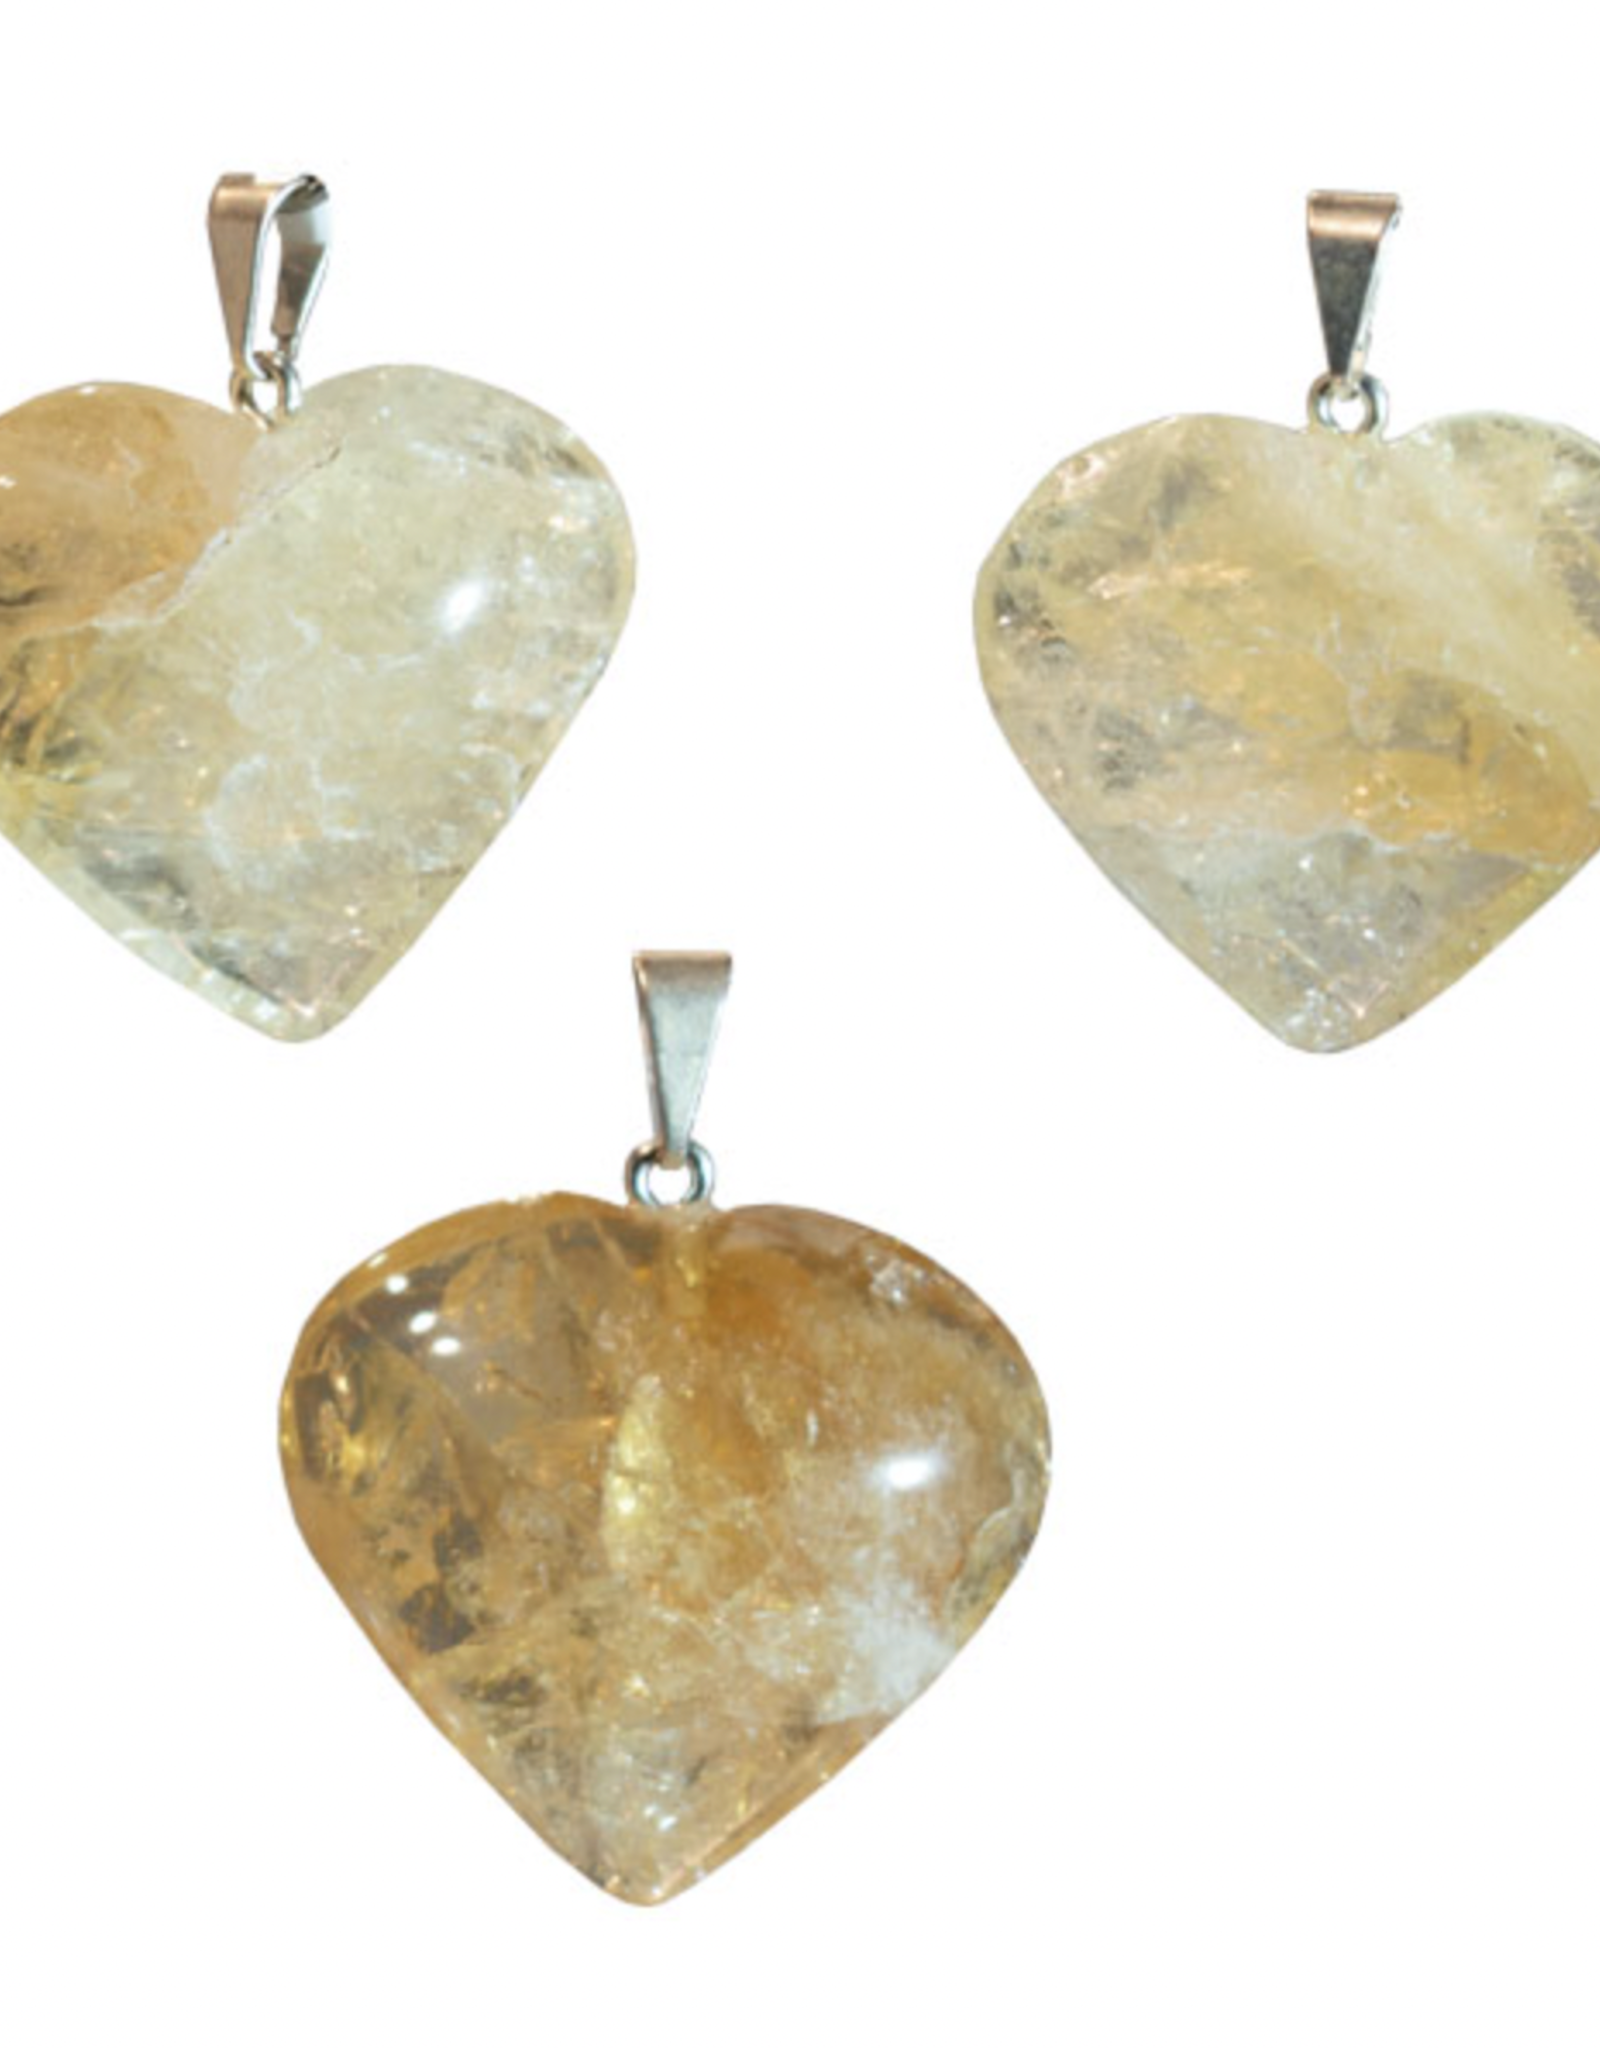 Gemstone Heart Pendant - Golden Healer Quartz